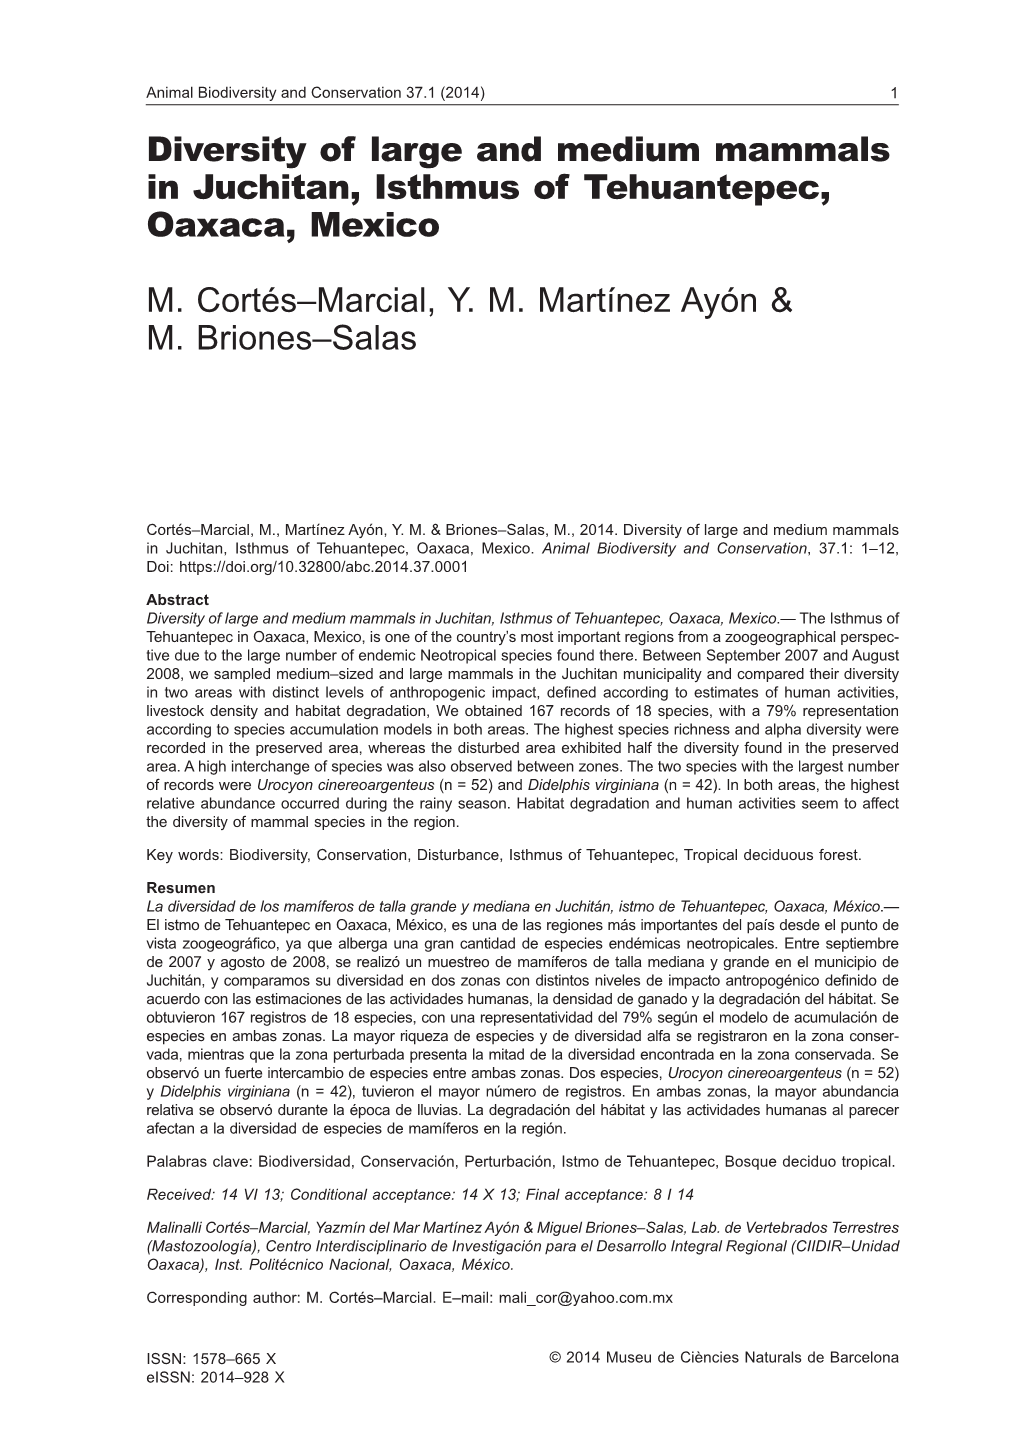 Diversity of Large and Medium Mammals in Juchitan, Isthmus of Tehuantepec, Oaxaca, Mexico